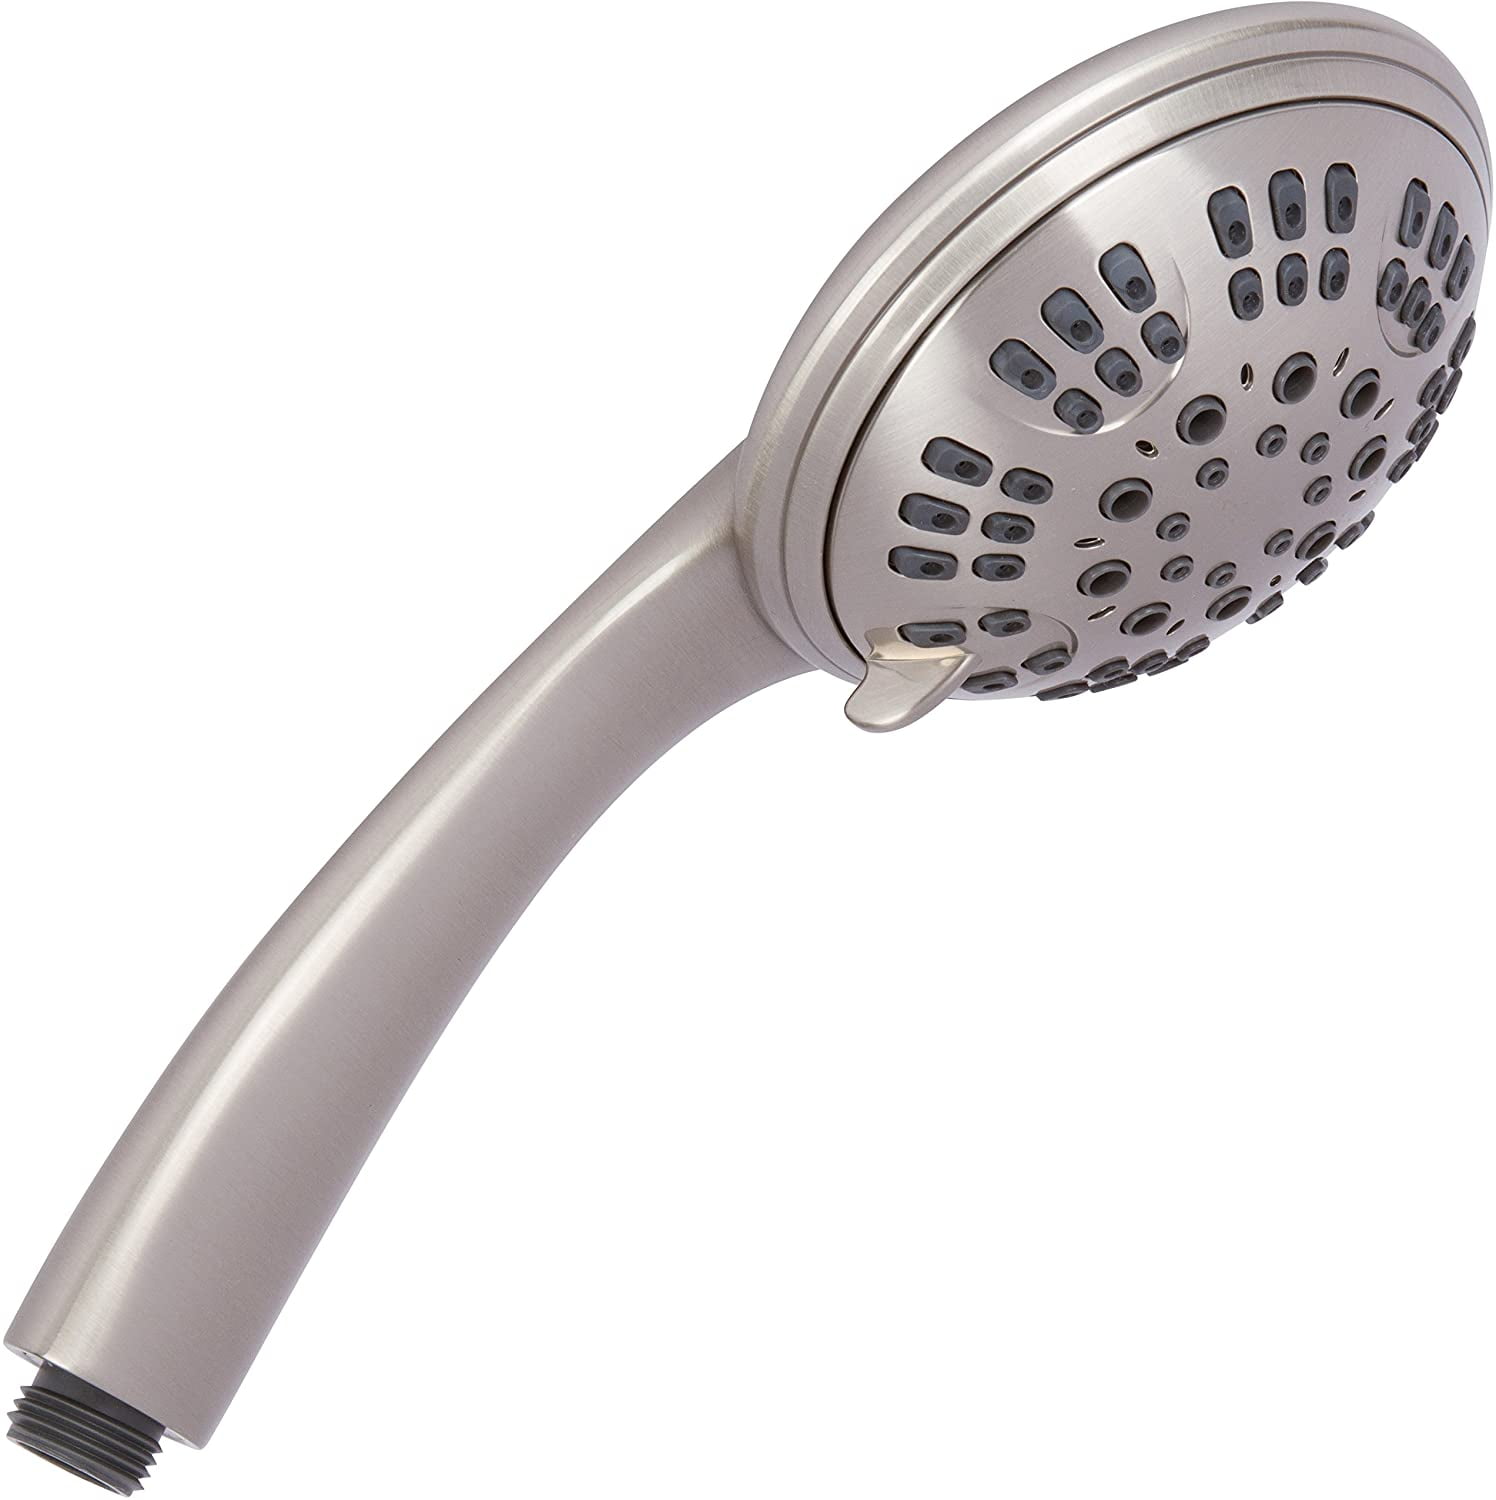 6 Function Luxury Handheld Shower Head Adjustable High Pressure Rainfall Sp... 